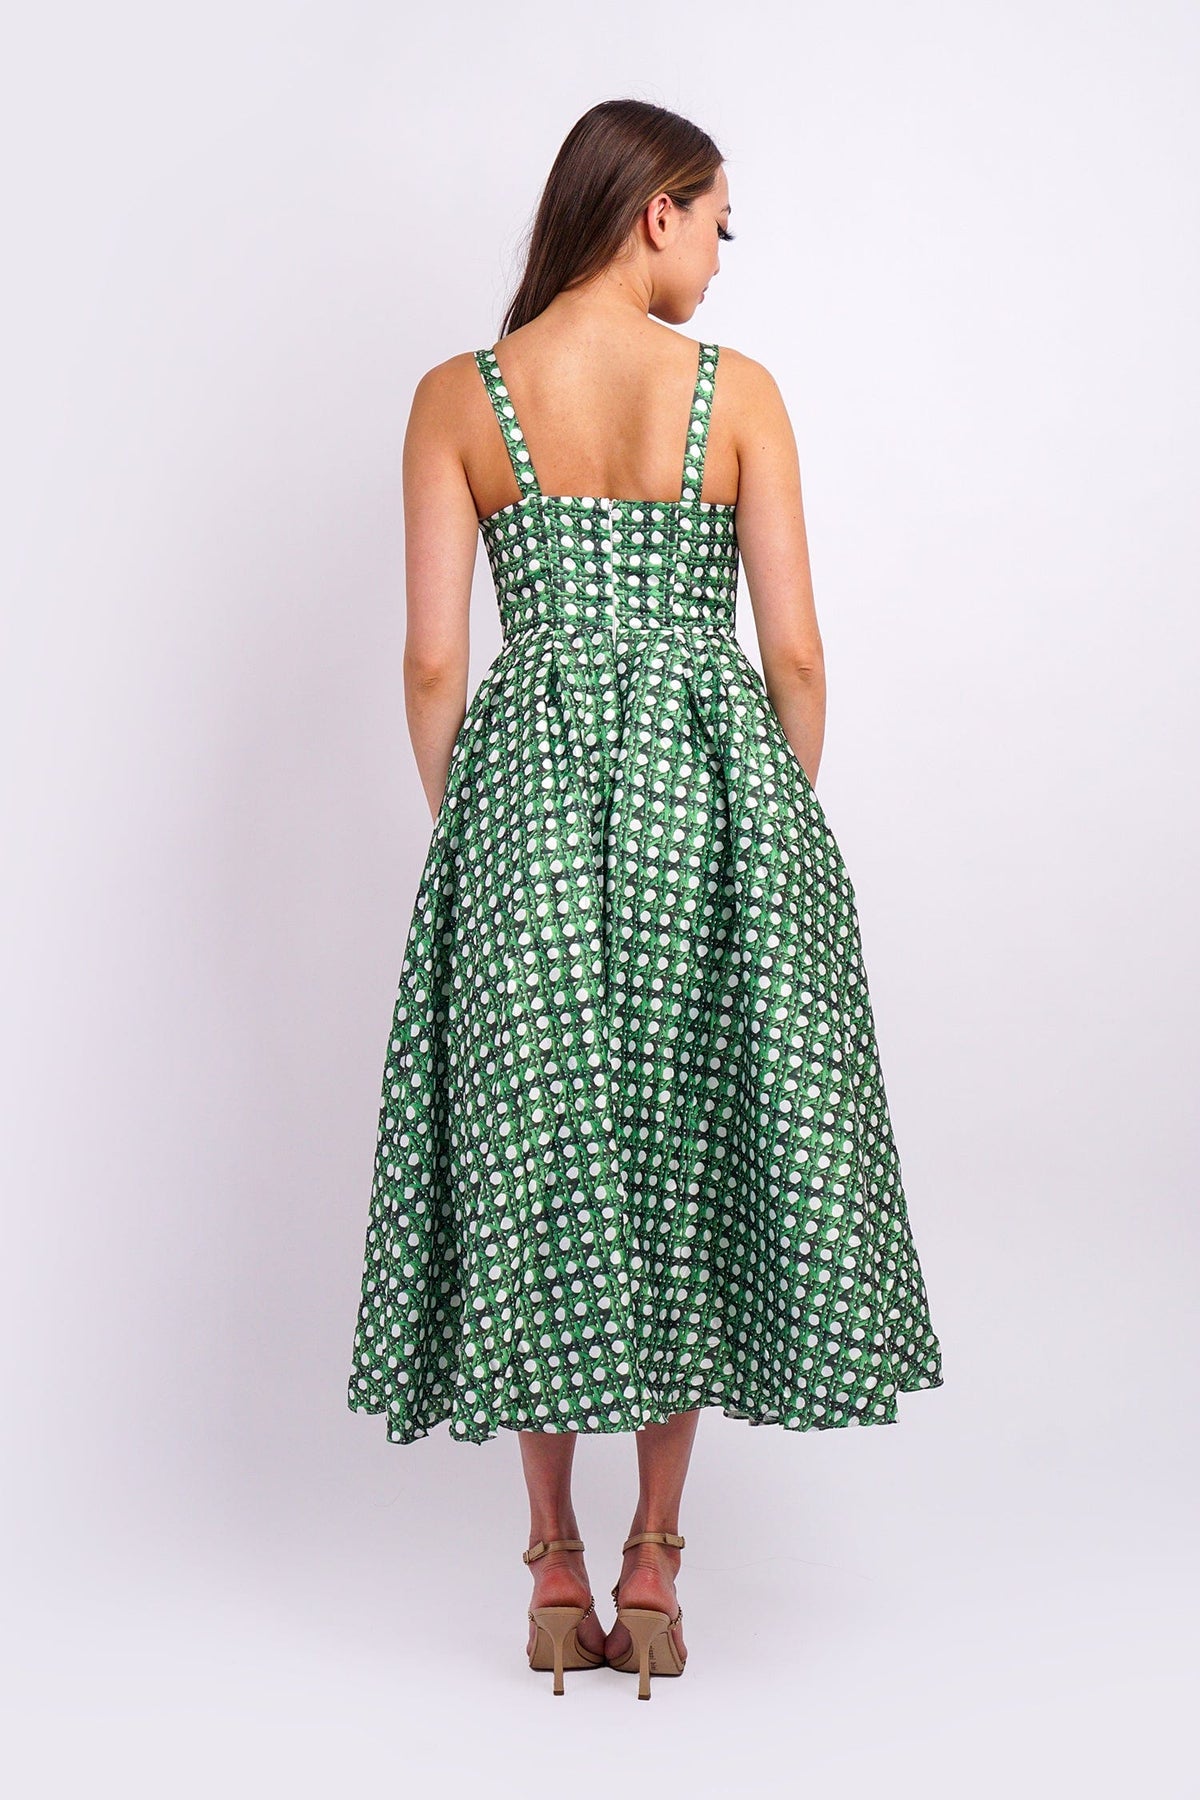 DCD DRESSES Green/White Basket Weave Corset Dress